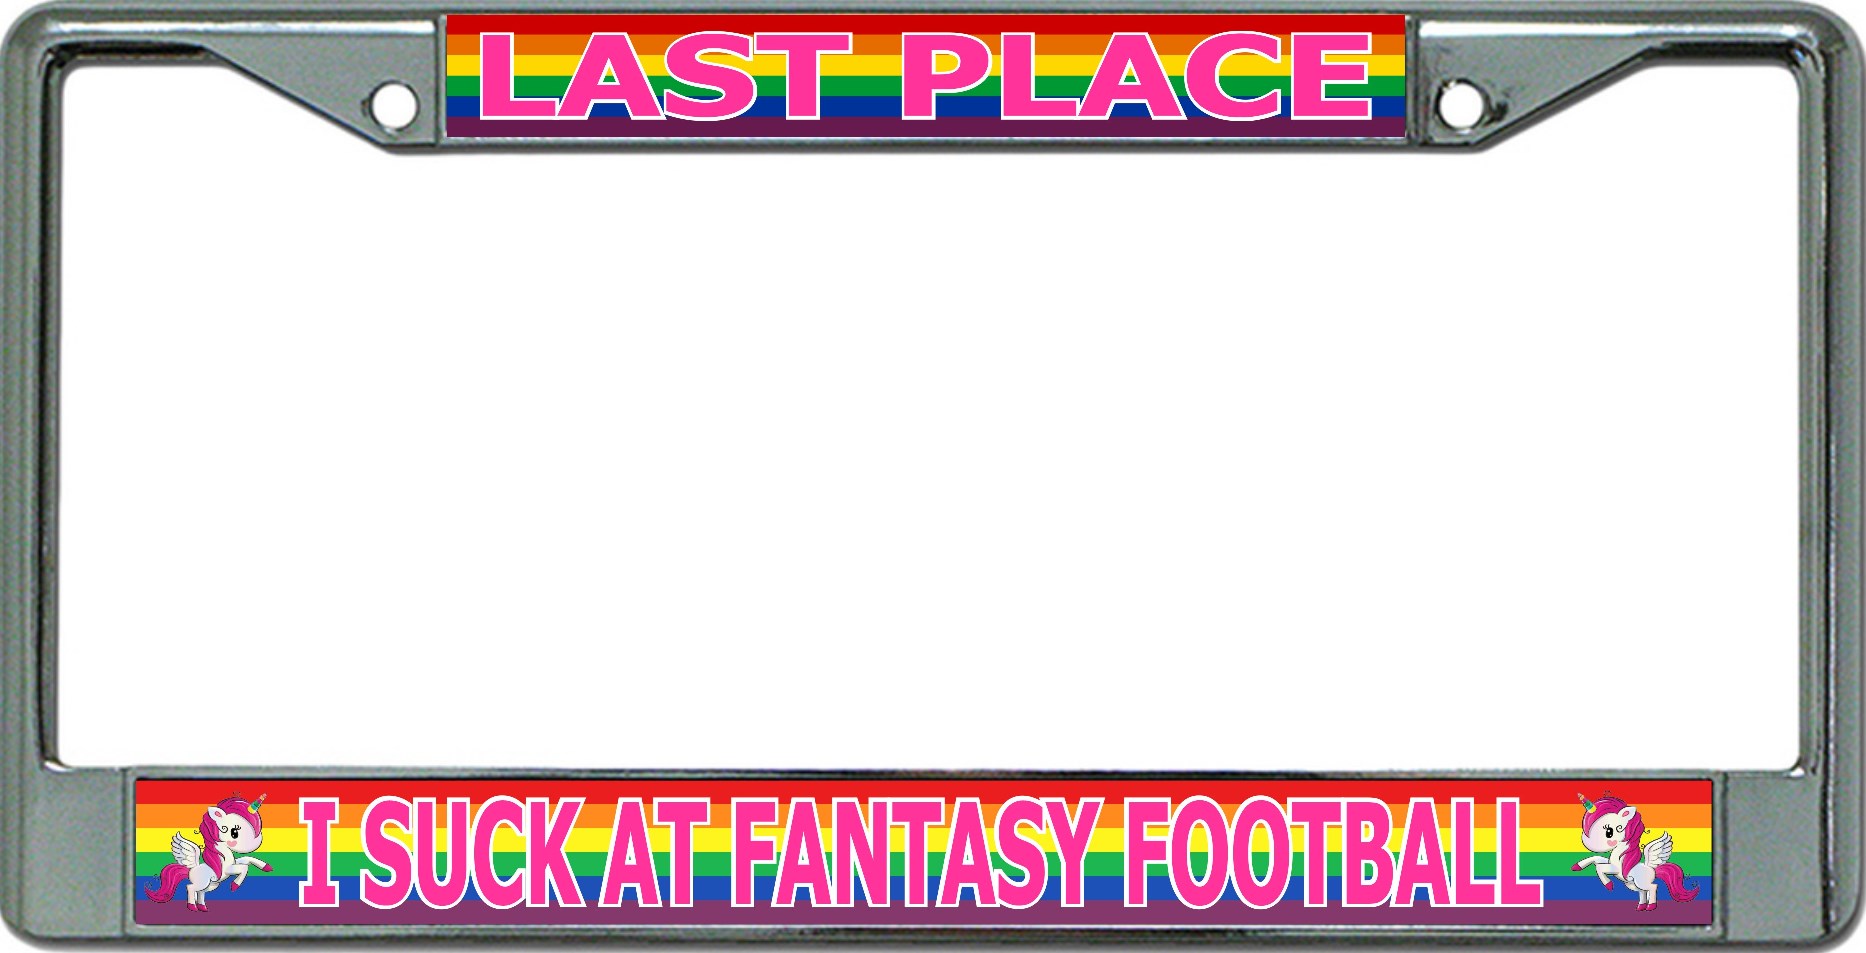 Fantasy FOOTBALL I Suck Last Place Rainbow Chrome License Plate Frame